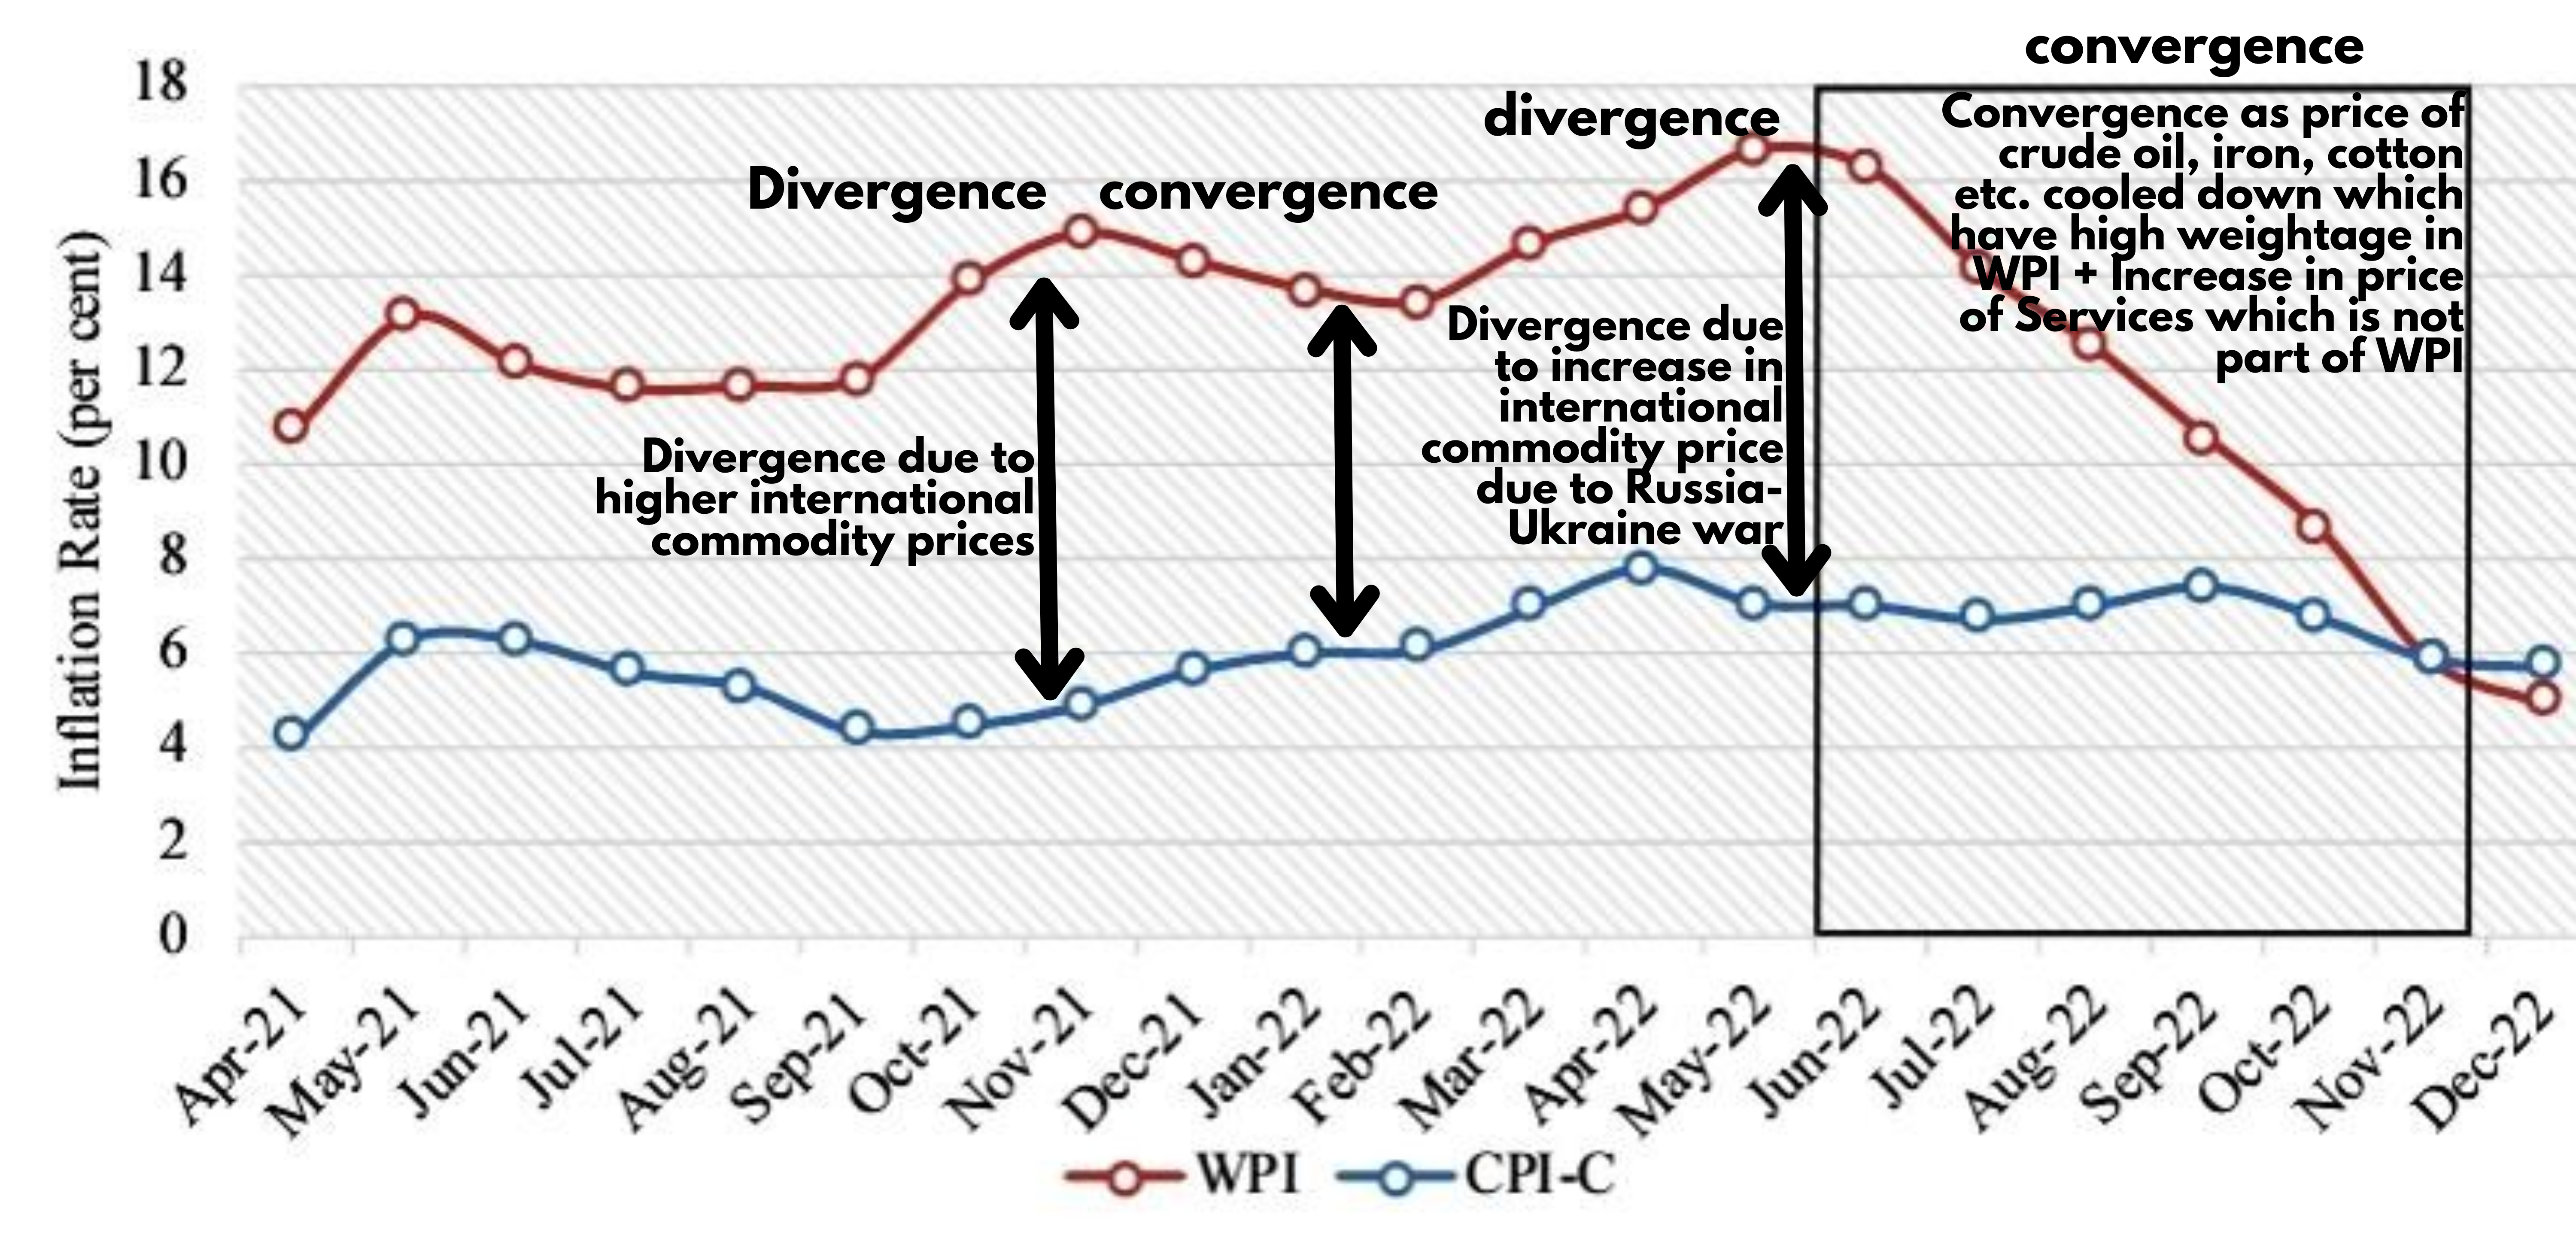 CPI-WPI Divergence and Convergence